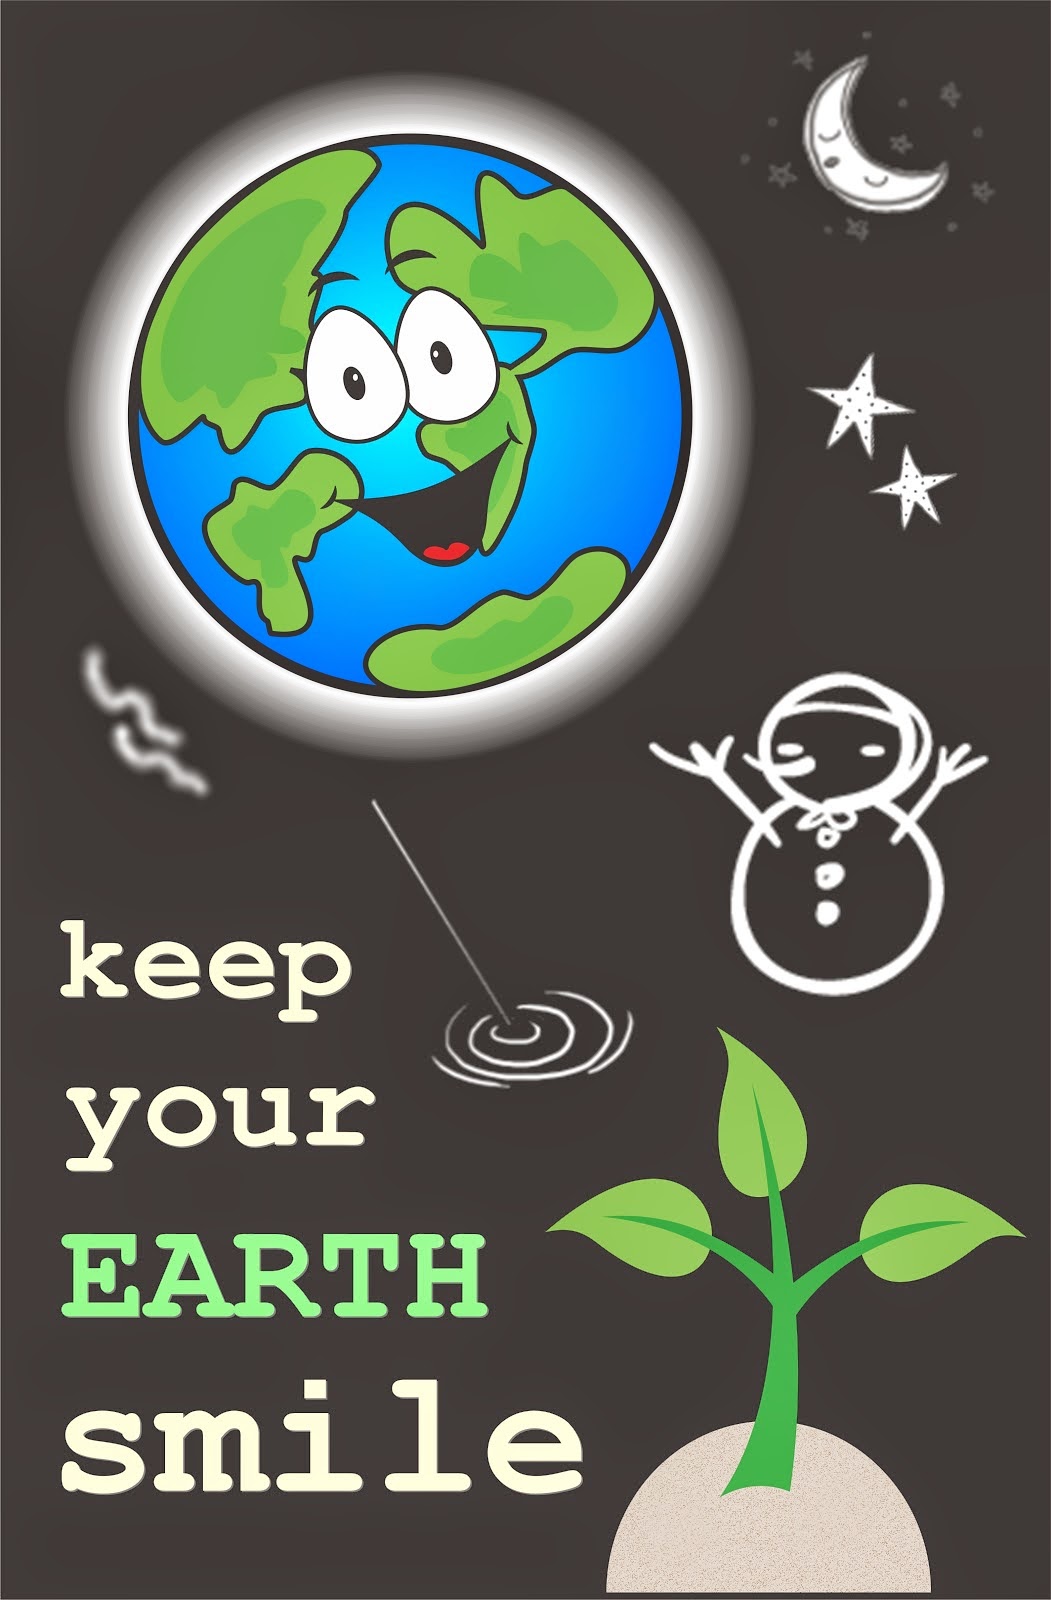 Kawoel's Blog: Gambar poster lingkungan hidup (adiwiyata 